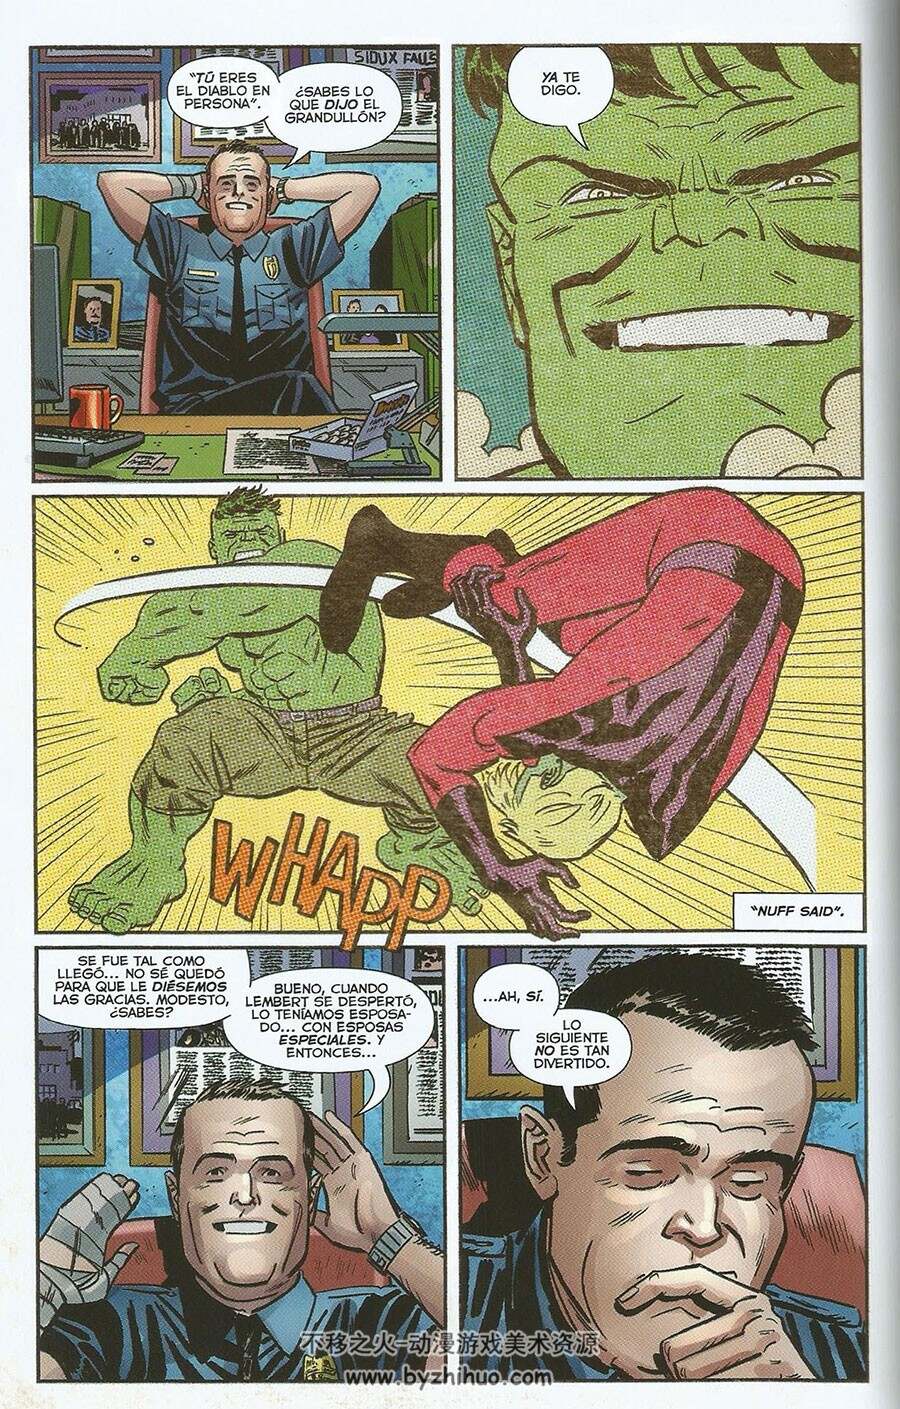 Immortal Hulk 第3册 Al Ewing - Joe Bennett 漫威超级英雄绿巨人浩克漫画